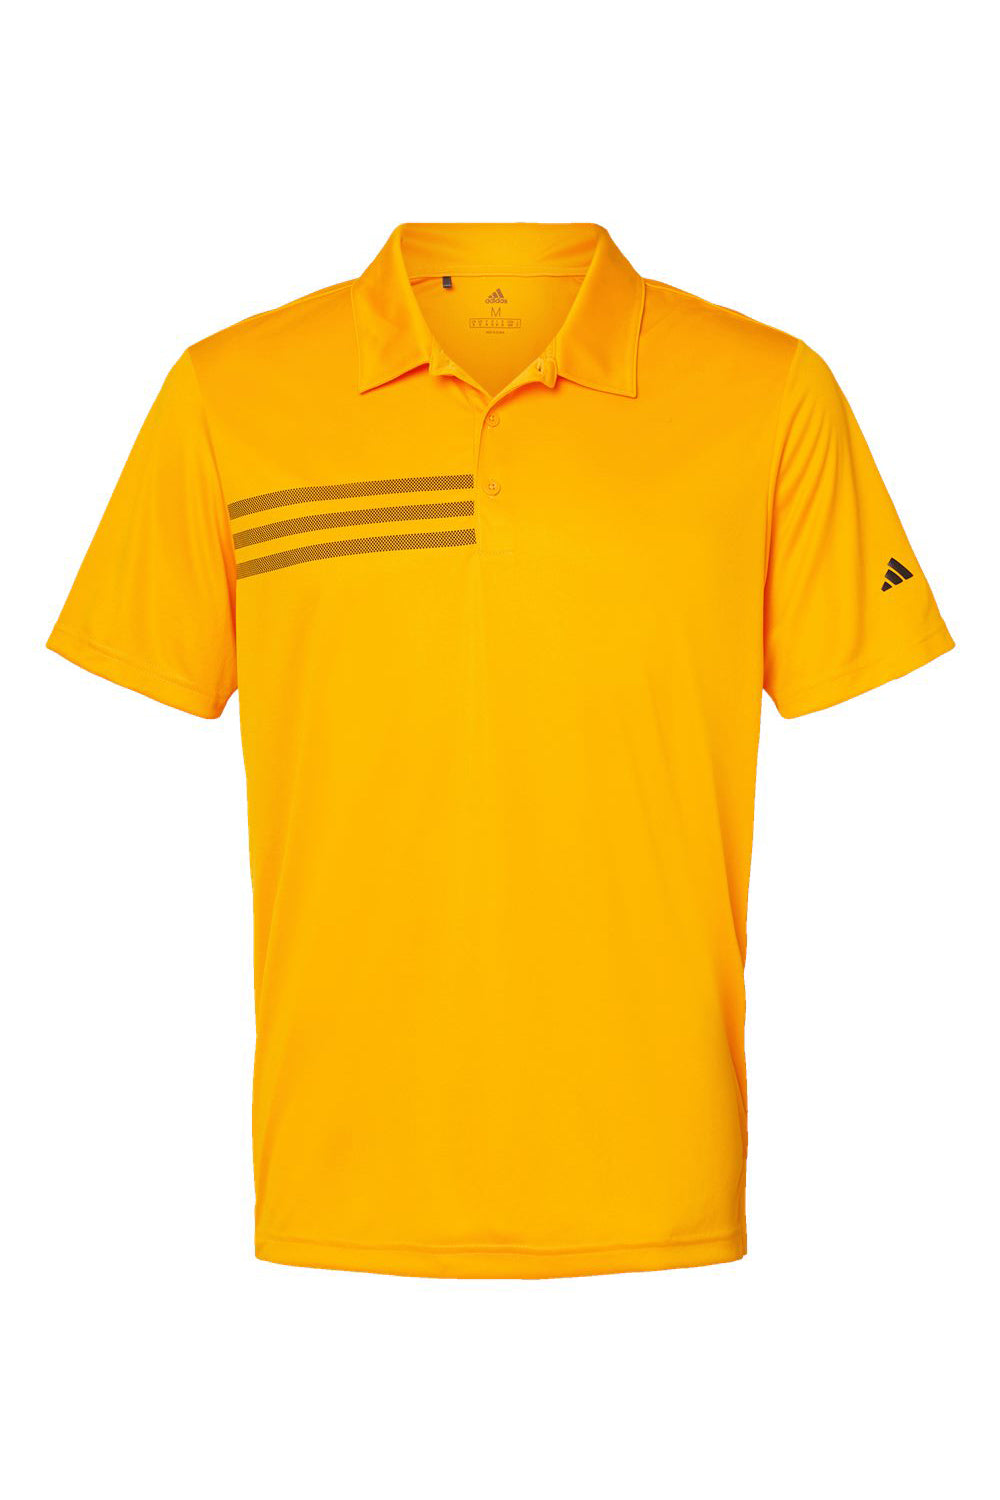 Adidas A324 Mens 3 Stripes Short Sleeve Polo Shirt Team Collegiate Gold/Black Flat Front